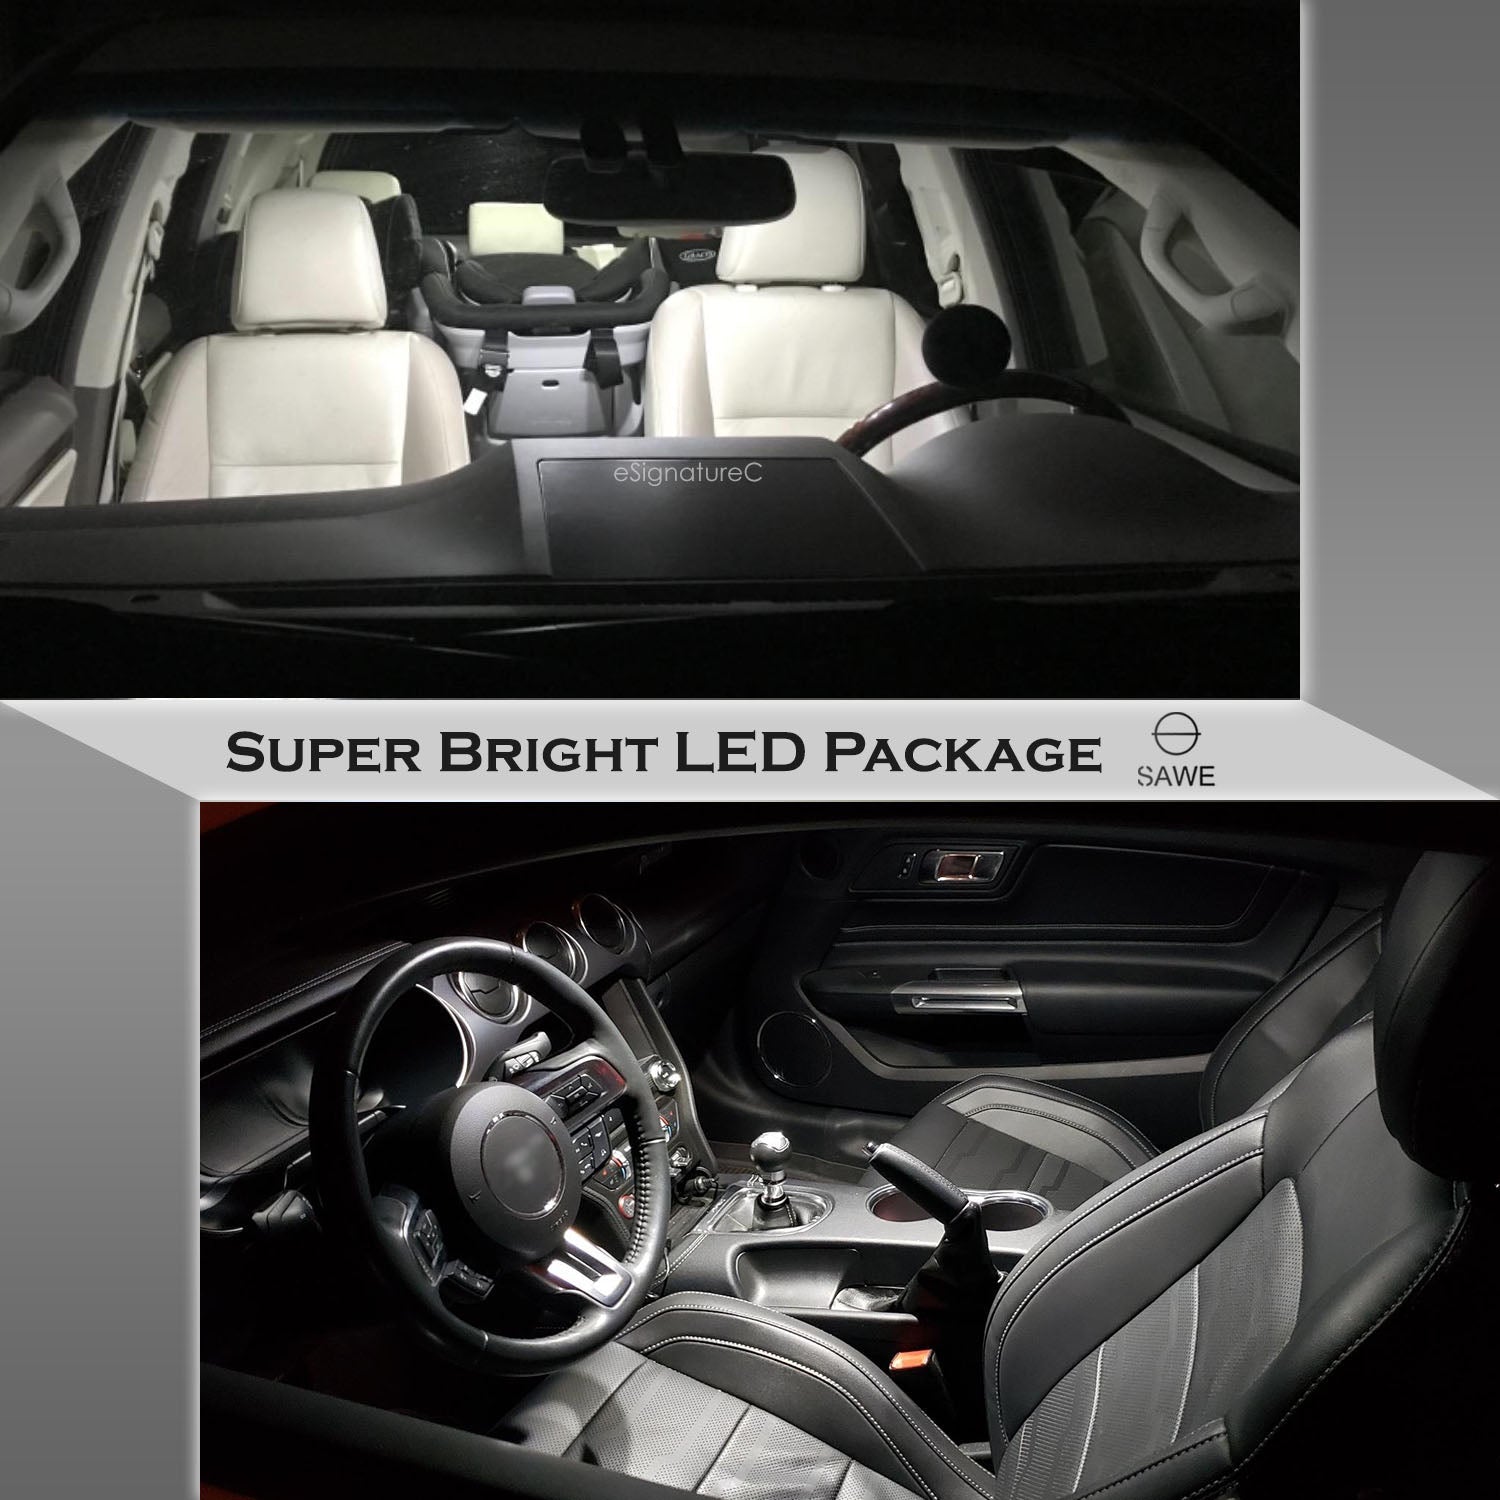 For Lincoln MKT Interior LED Lights - Dome & Map Light Bulb Package Kit for 2010 - 2019 - White